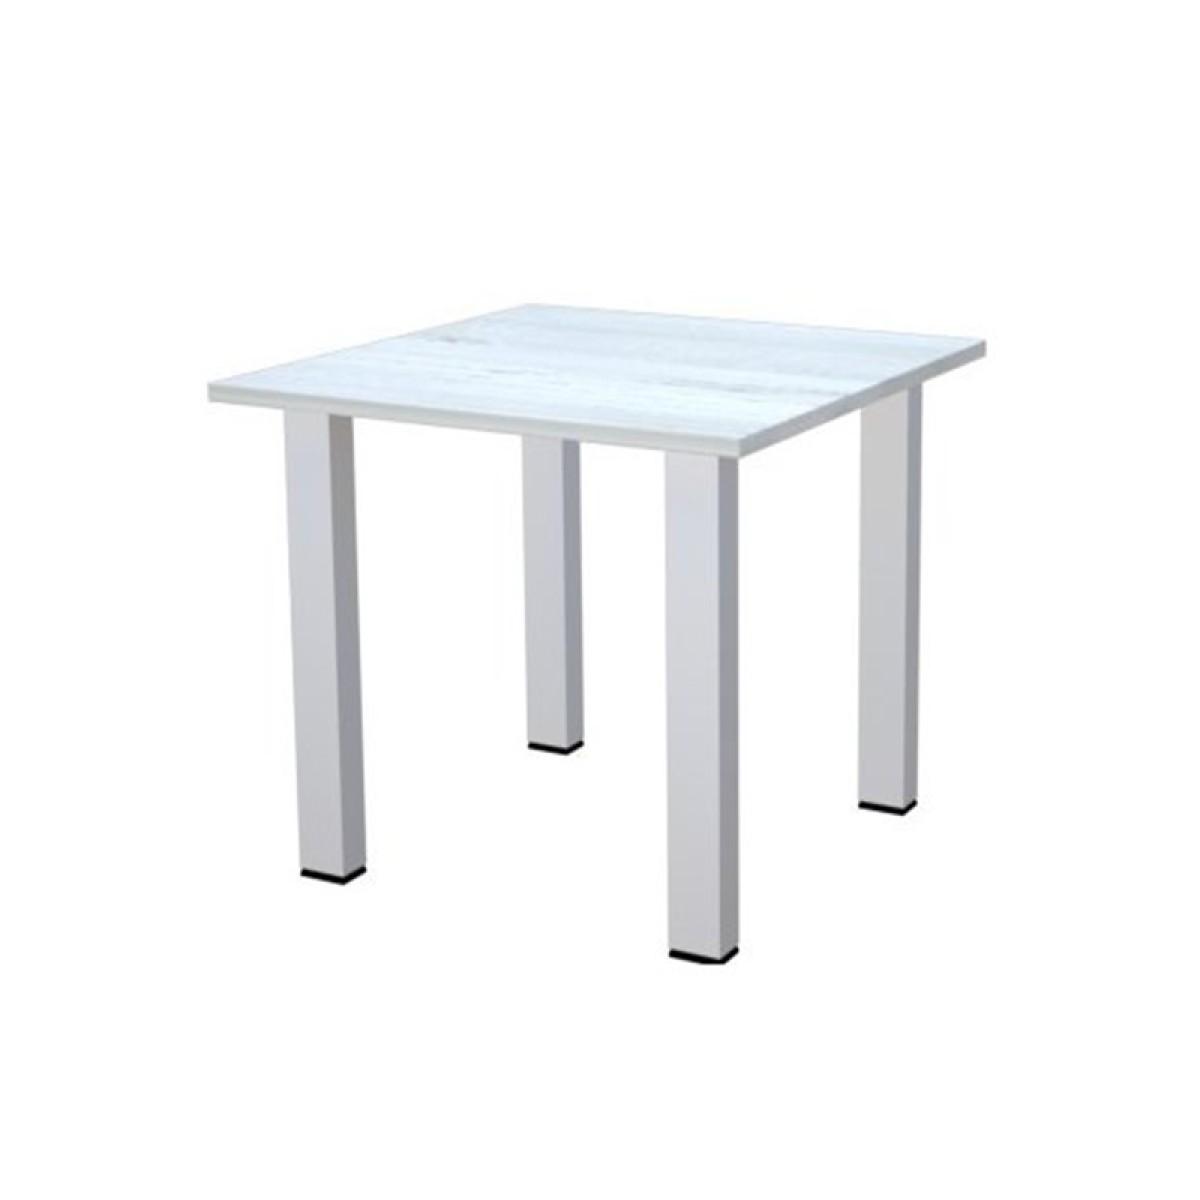 Стол НТ-160 сосна Винтер. Кухонный стол Винтер-2 Marble White. Картинки прямоугольного стола НТ 120 сосна Винтер. Стол куйбышева